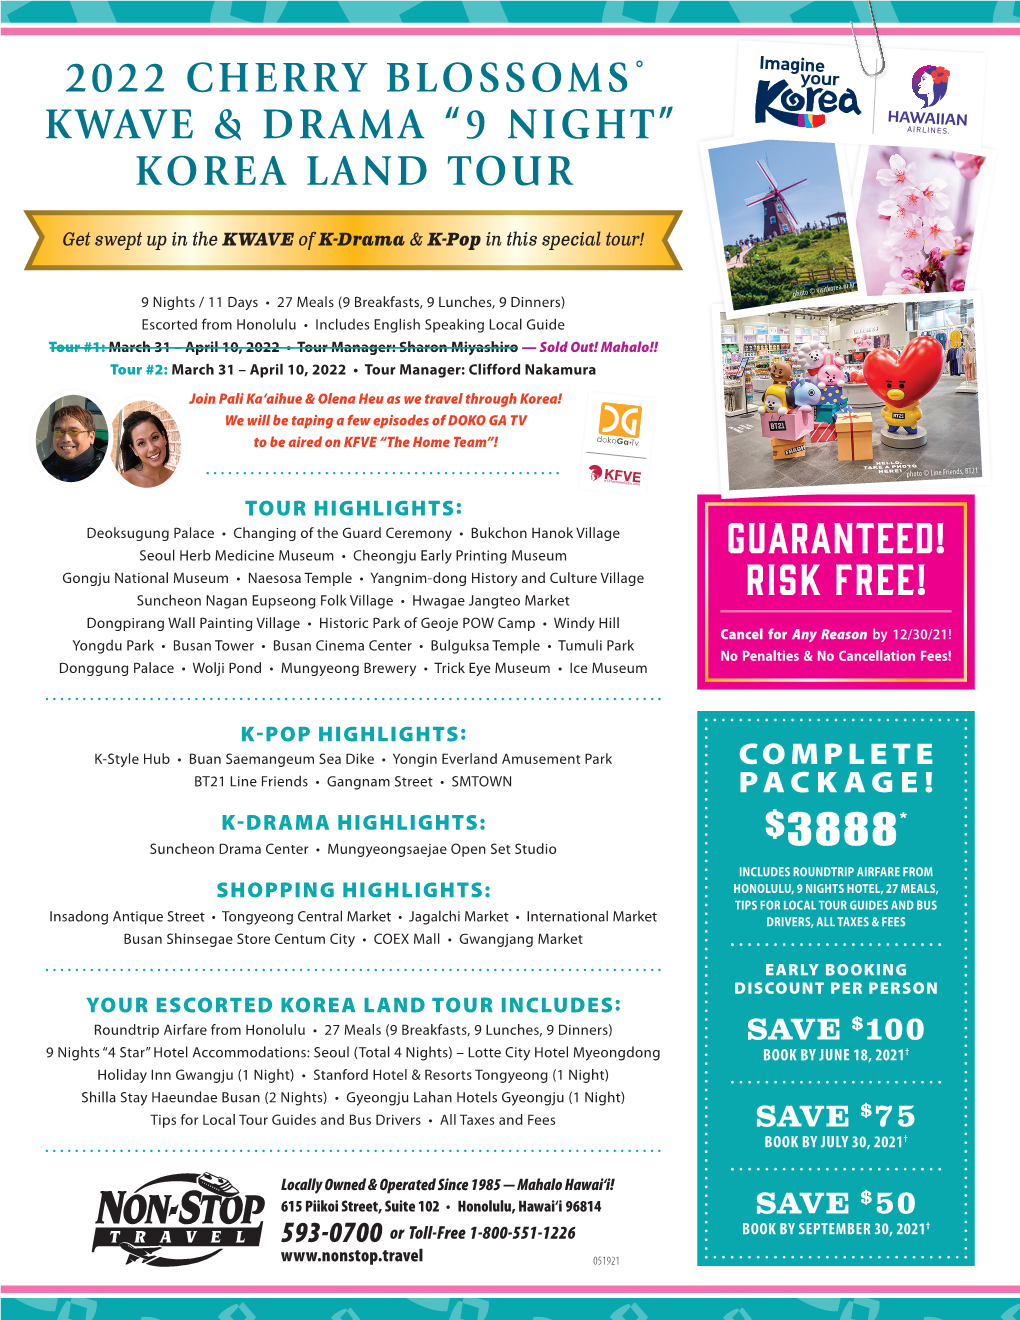 2022 Cherry Blossoms° Kwave & Drama “9 Night” Korea Land Tour